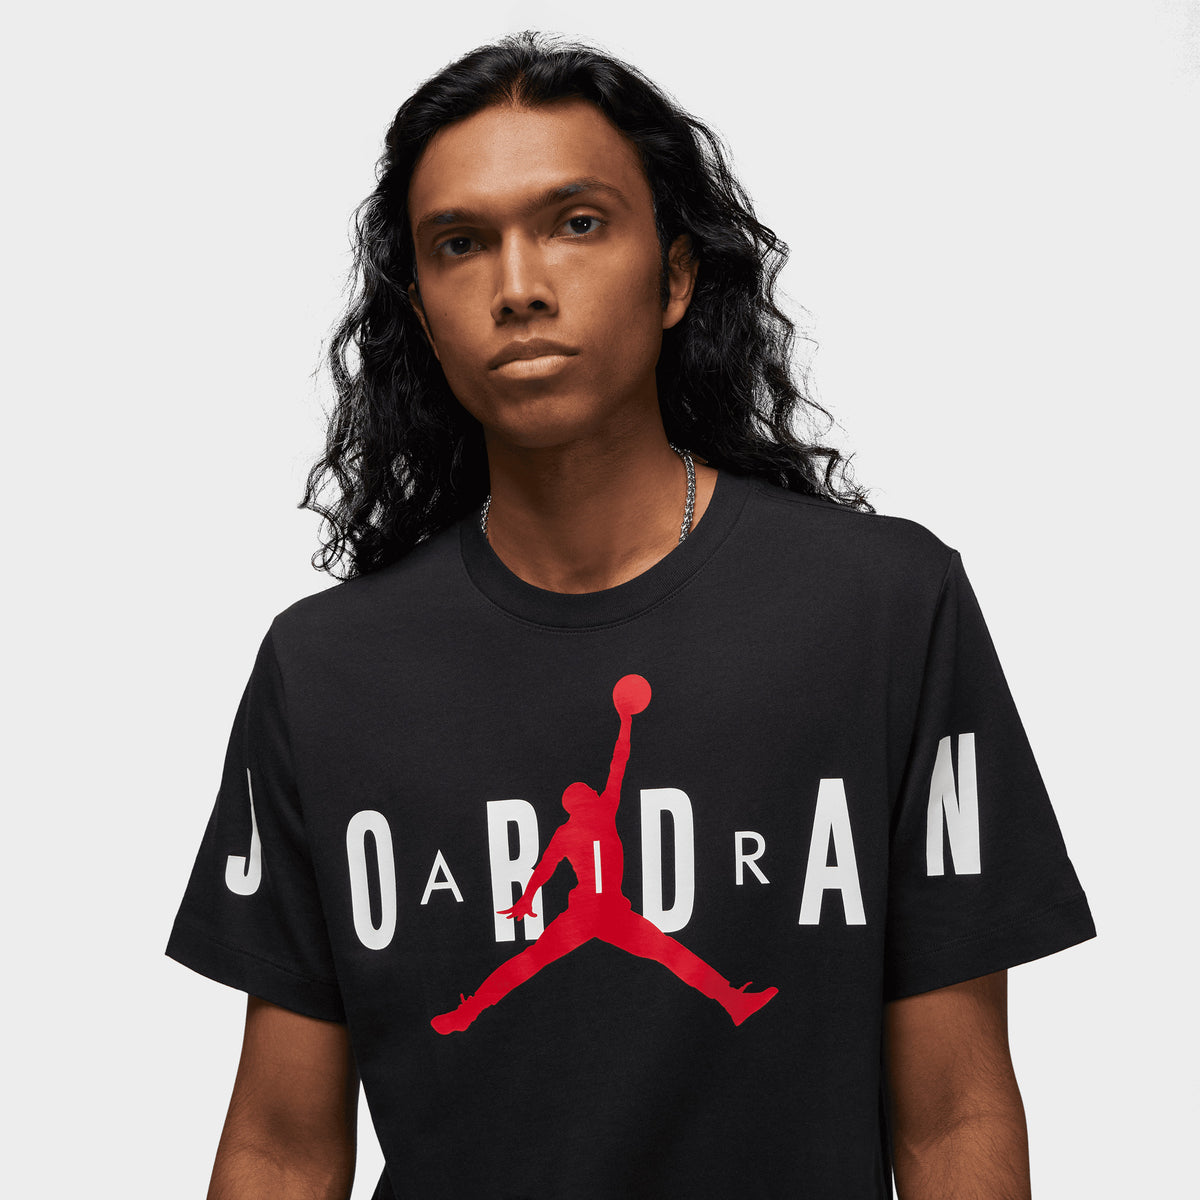 Jordan Air Stretch T-shirt Black / White - Black | JD Sports Canada